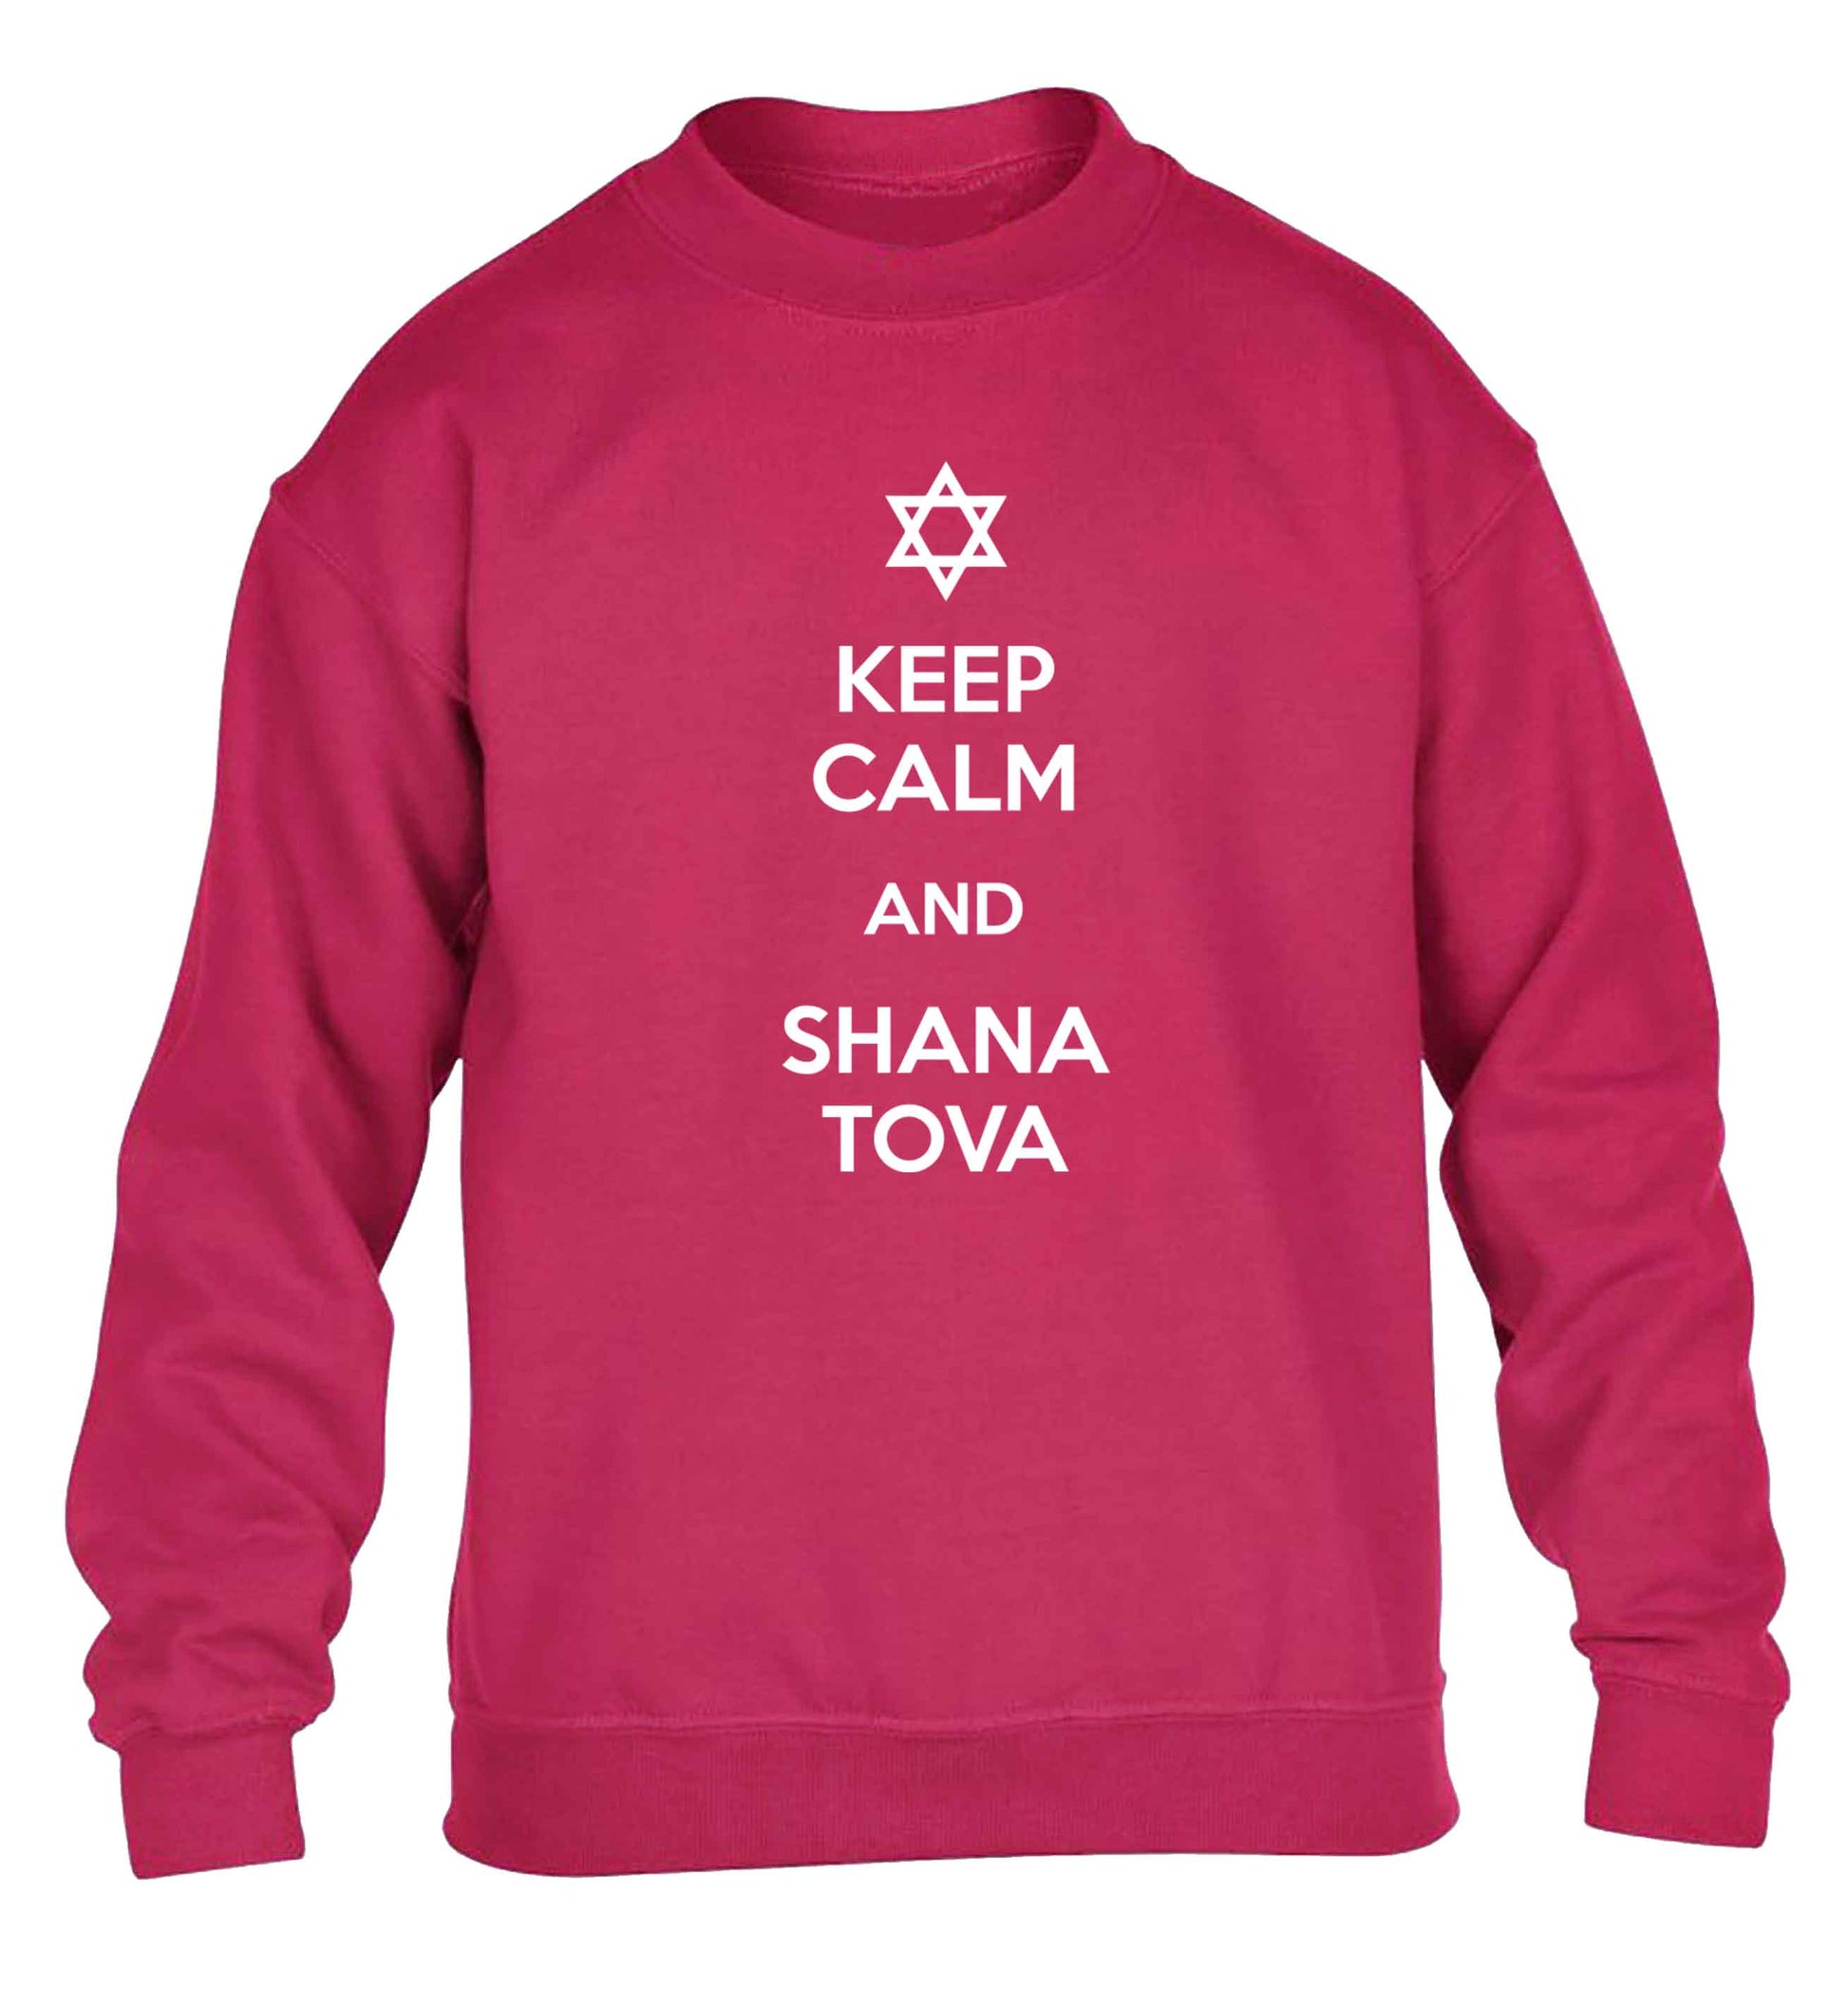 Keep calm and shana tova children's pink sweater 12-13 Years